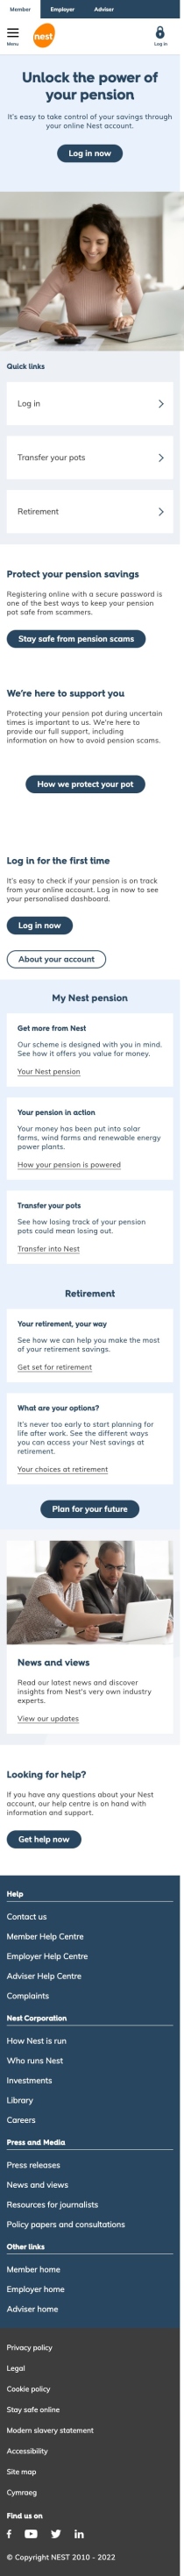 Nest Pensions website screenshot on mobile device